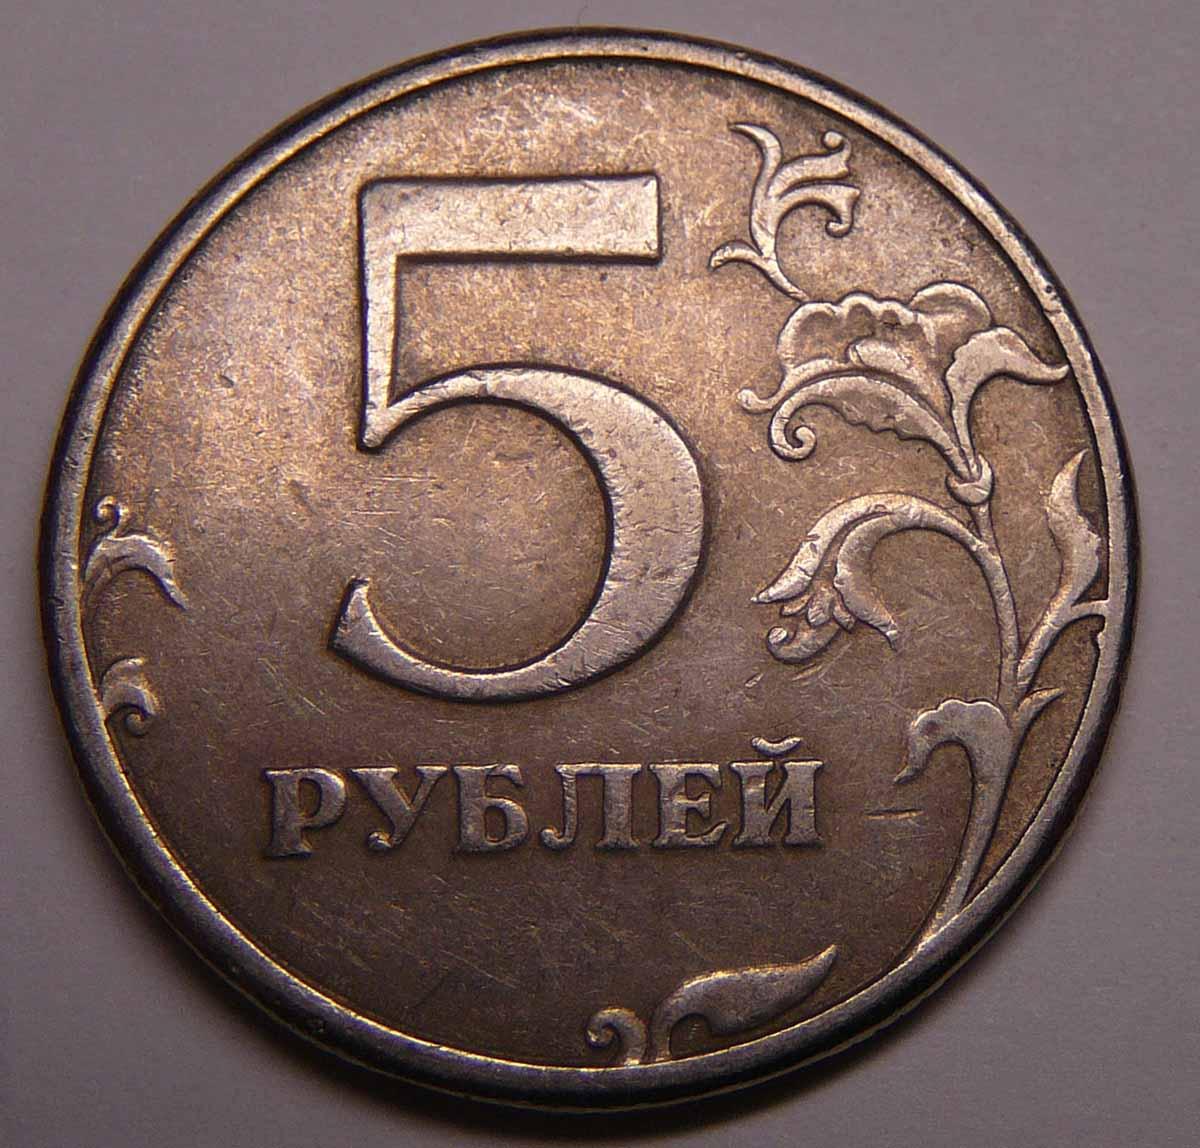 5 рублей километр. 5 Рублей 1997. Пять рублей. 5 Рублей 1997 года. Пять рублей 1997.